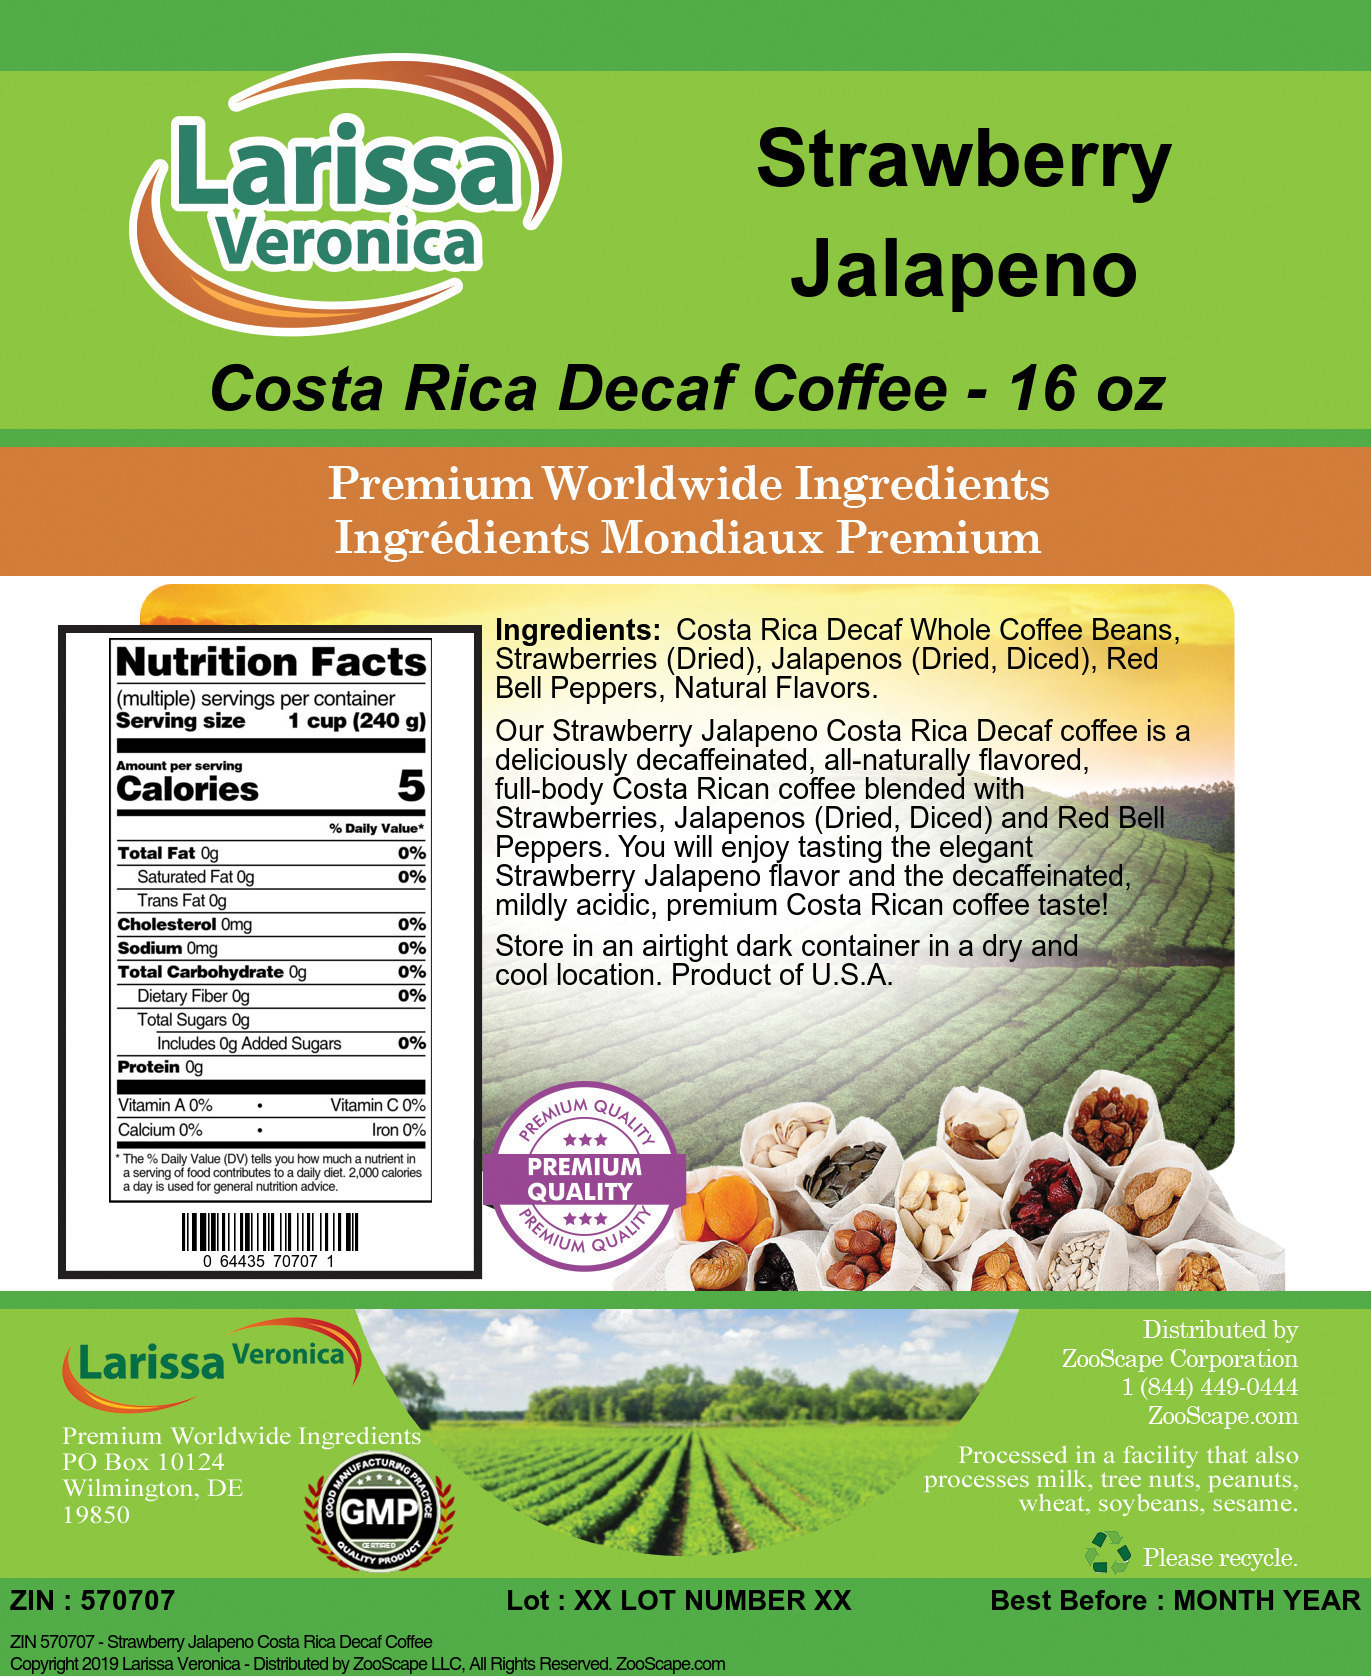 Strawberry Jalapeno Costa Rica Decaf Coffee - Label